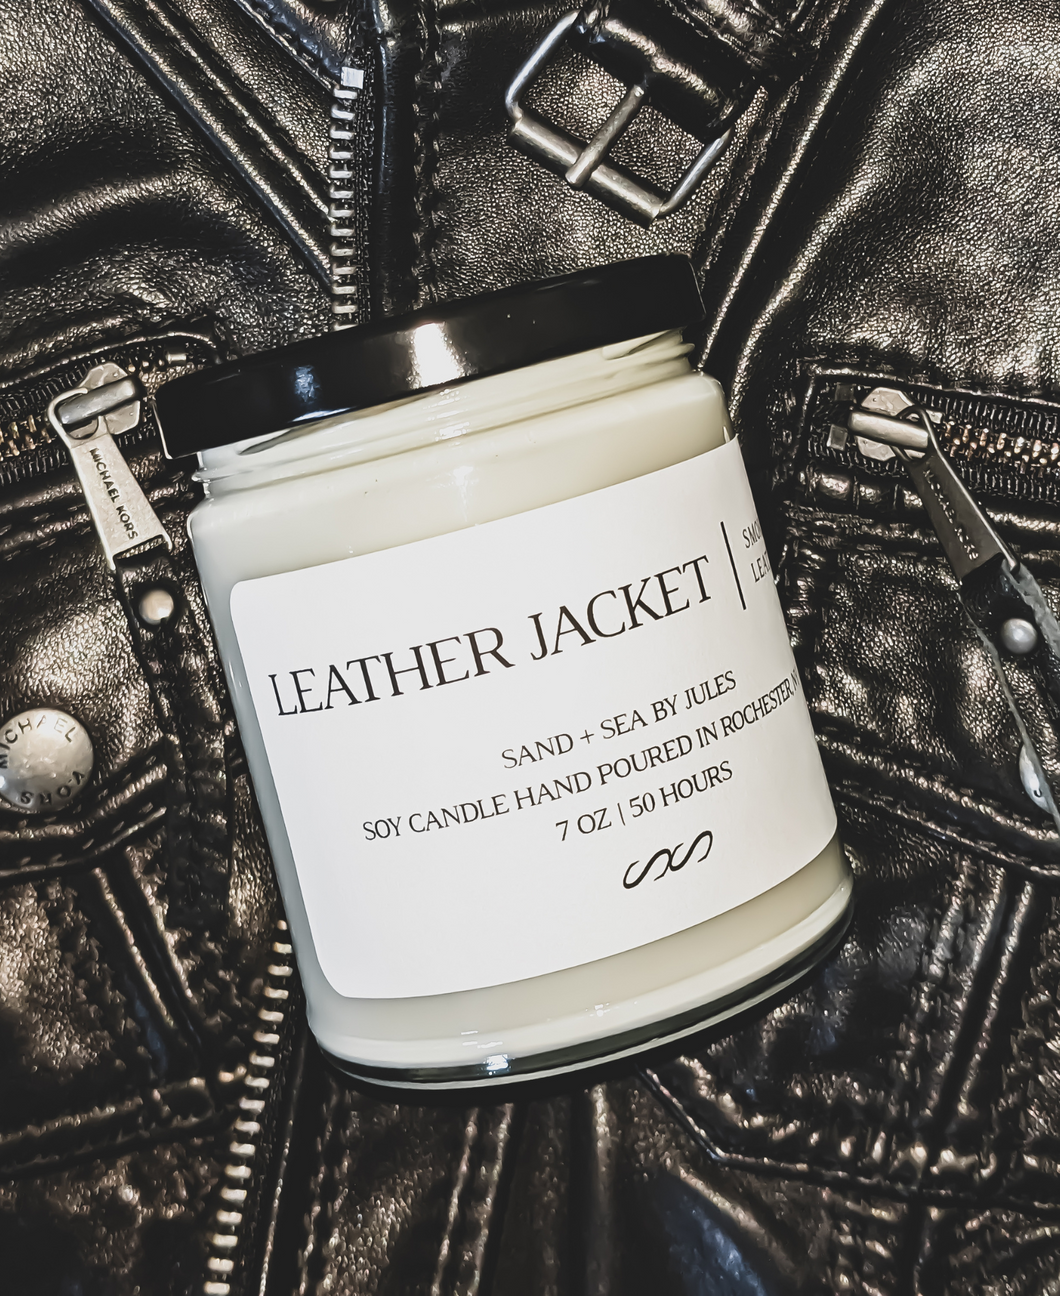 Leather Jacket: Smoke + Leather